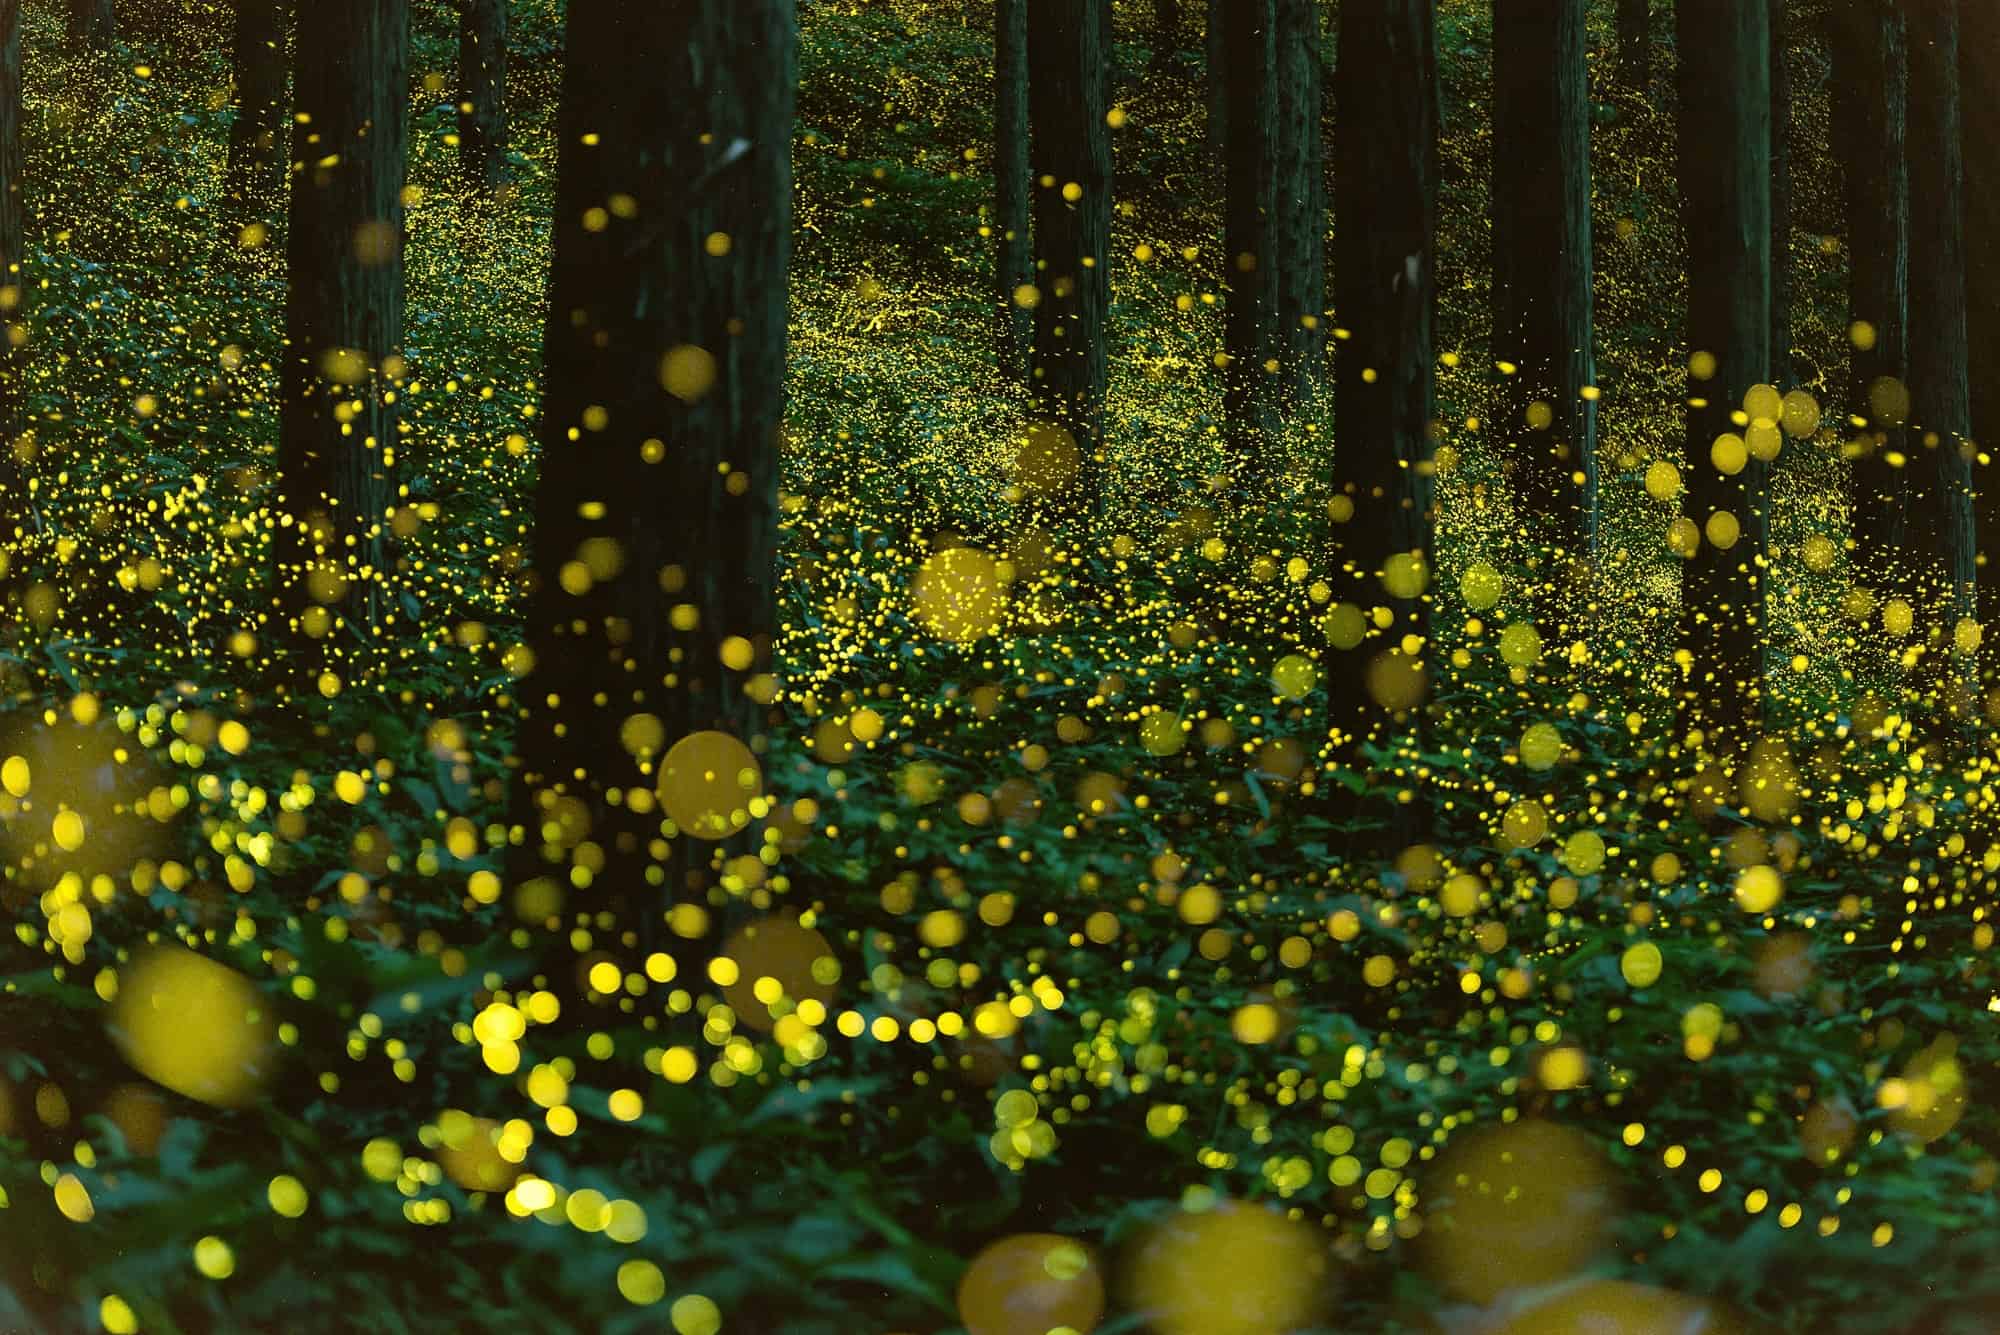 The glow of the princess fireflies.